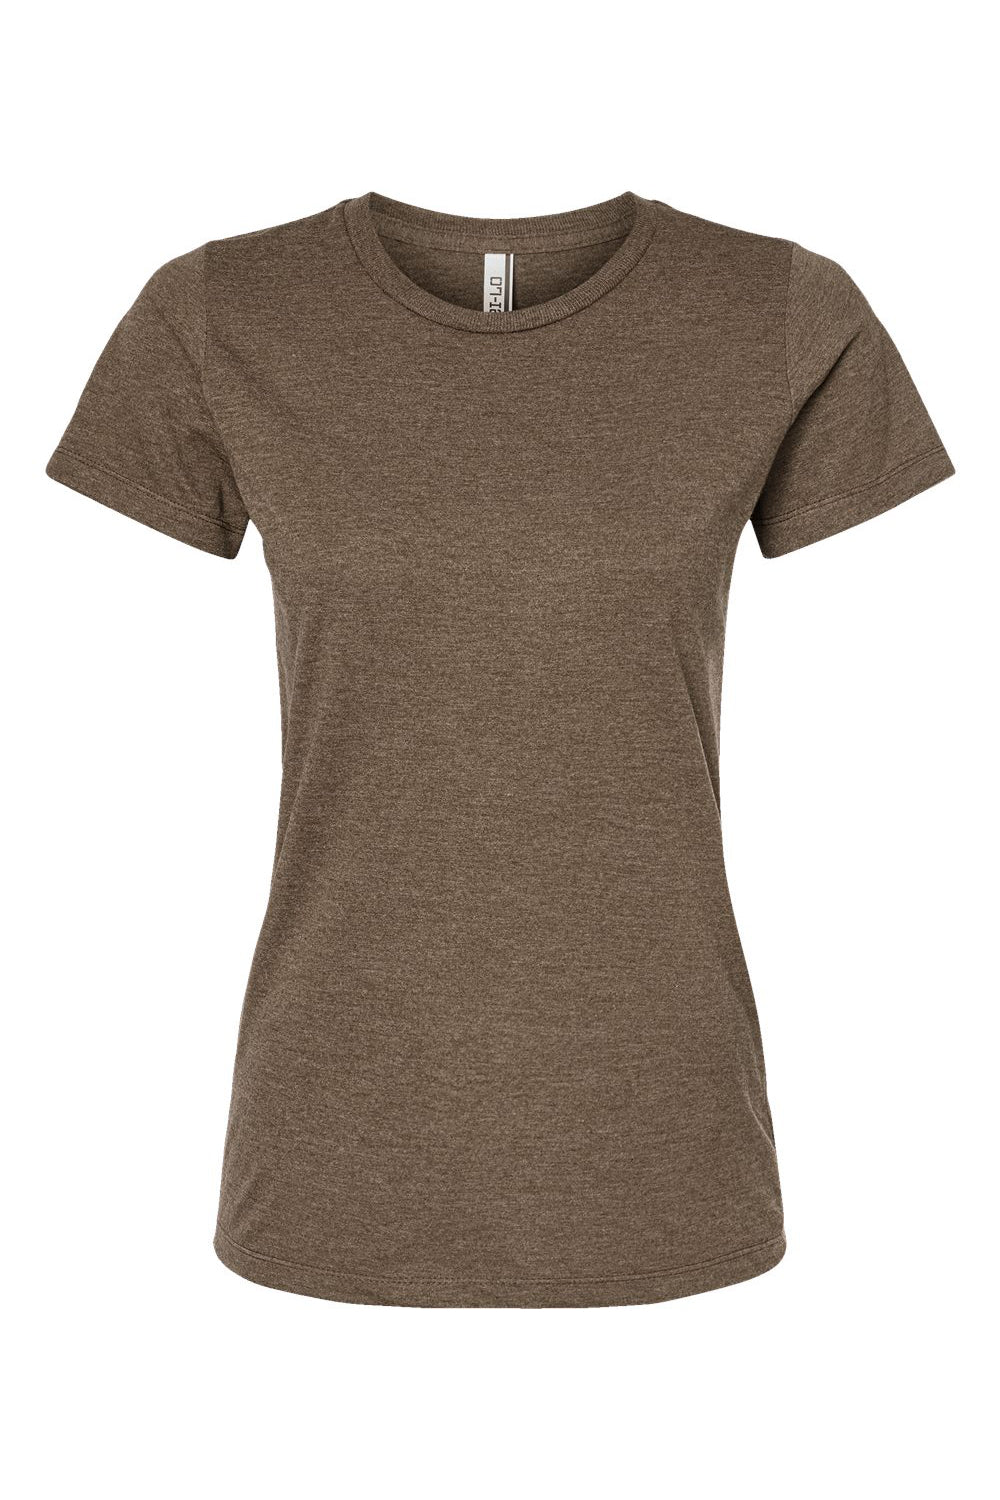 Tultex 542 Womens Premium Short Sleeve Crewneck T-Shirt Heather Brown Flat Front